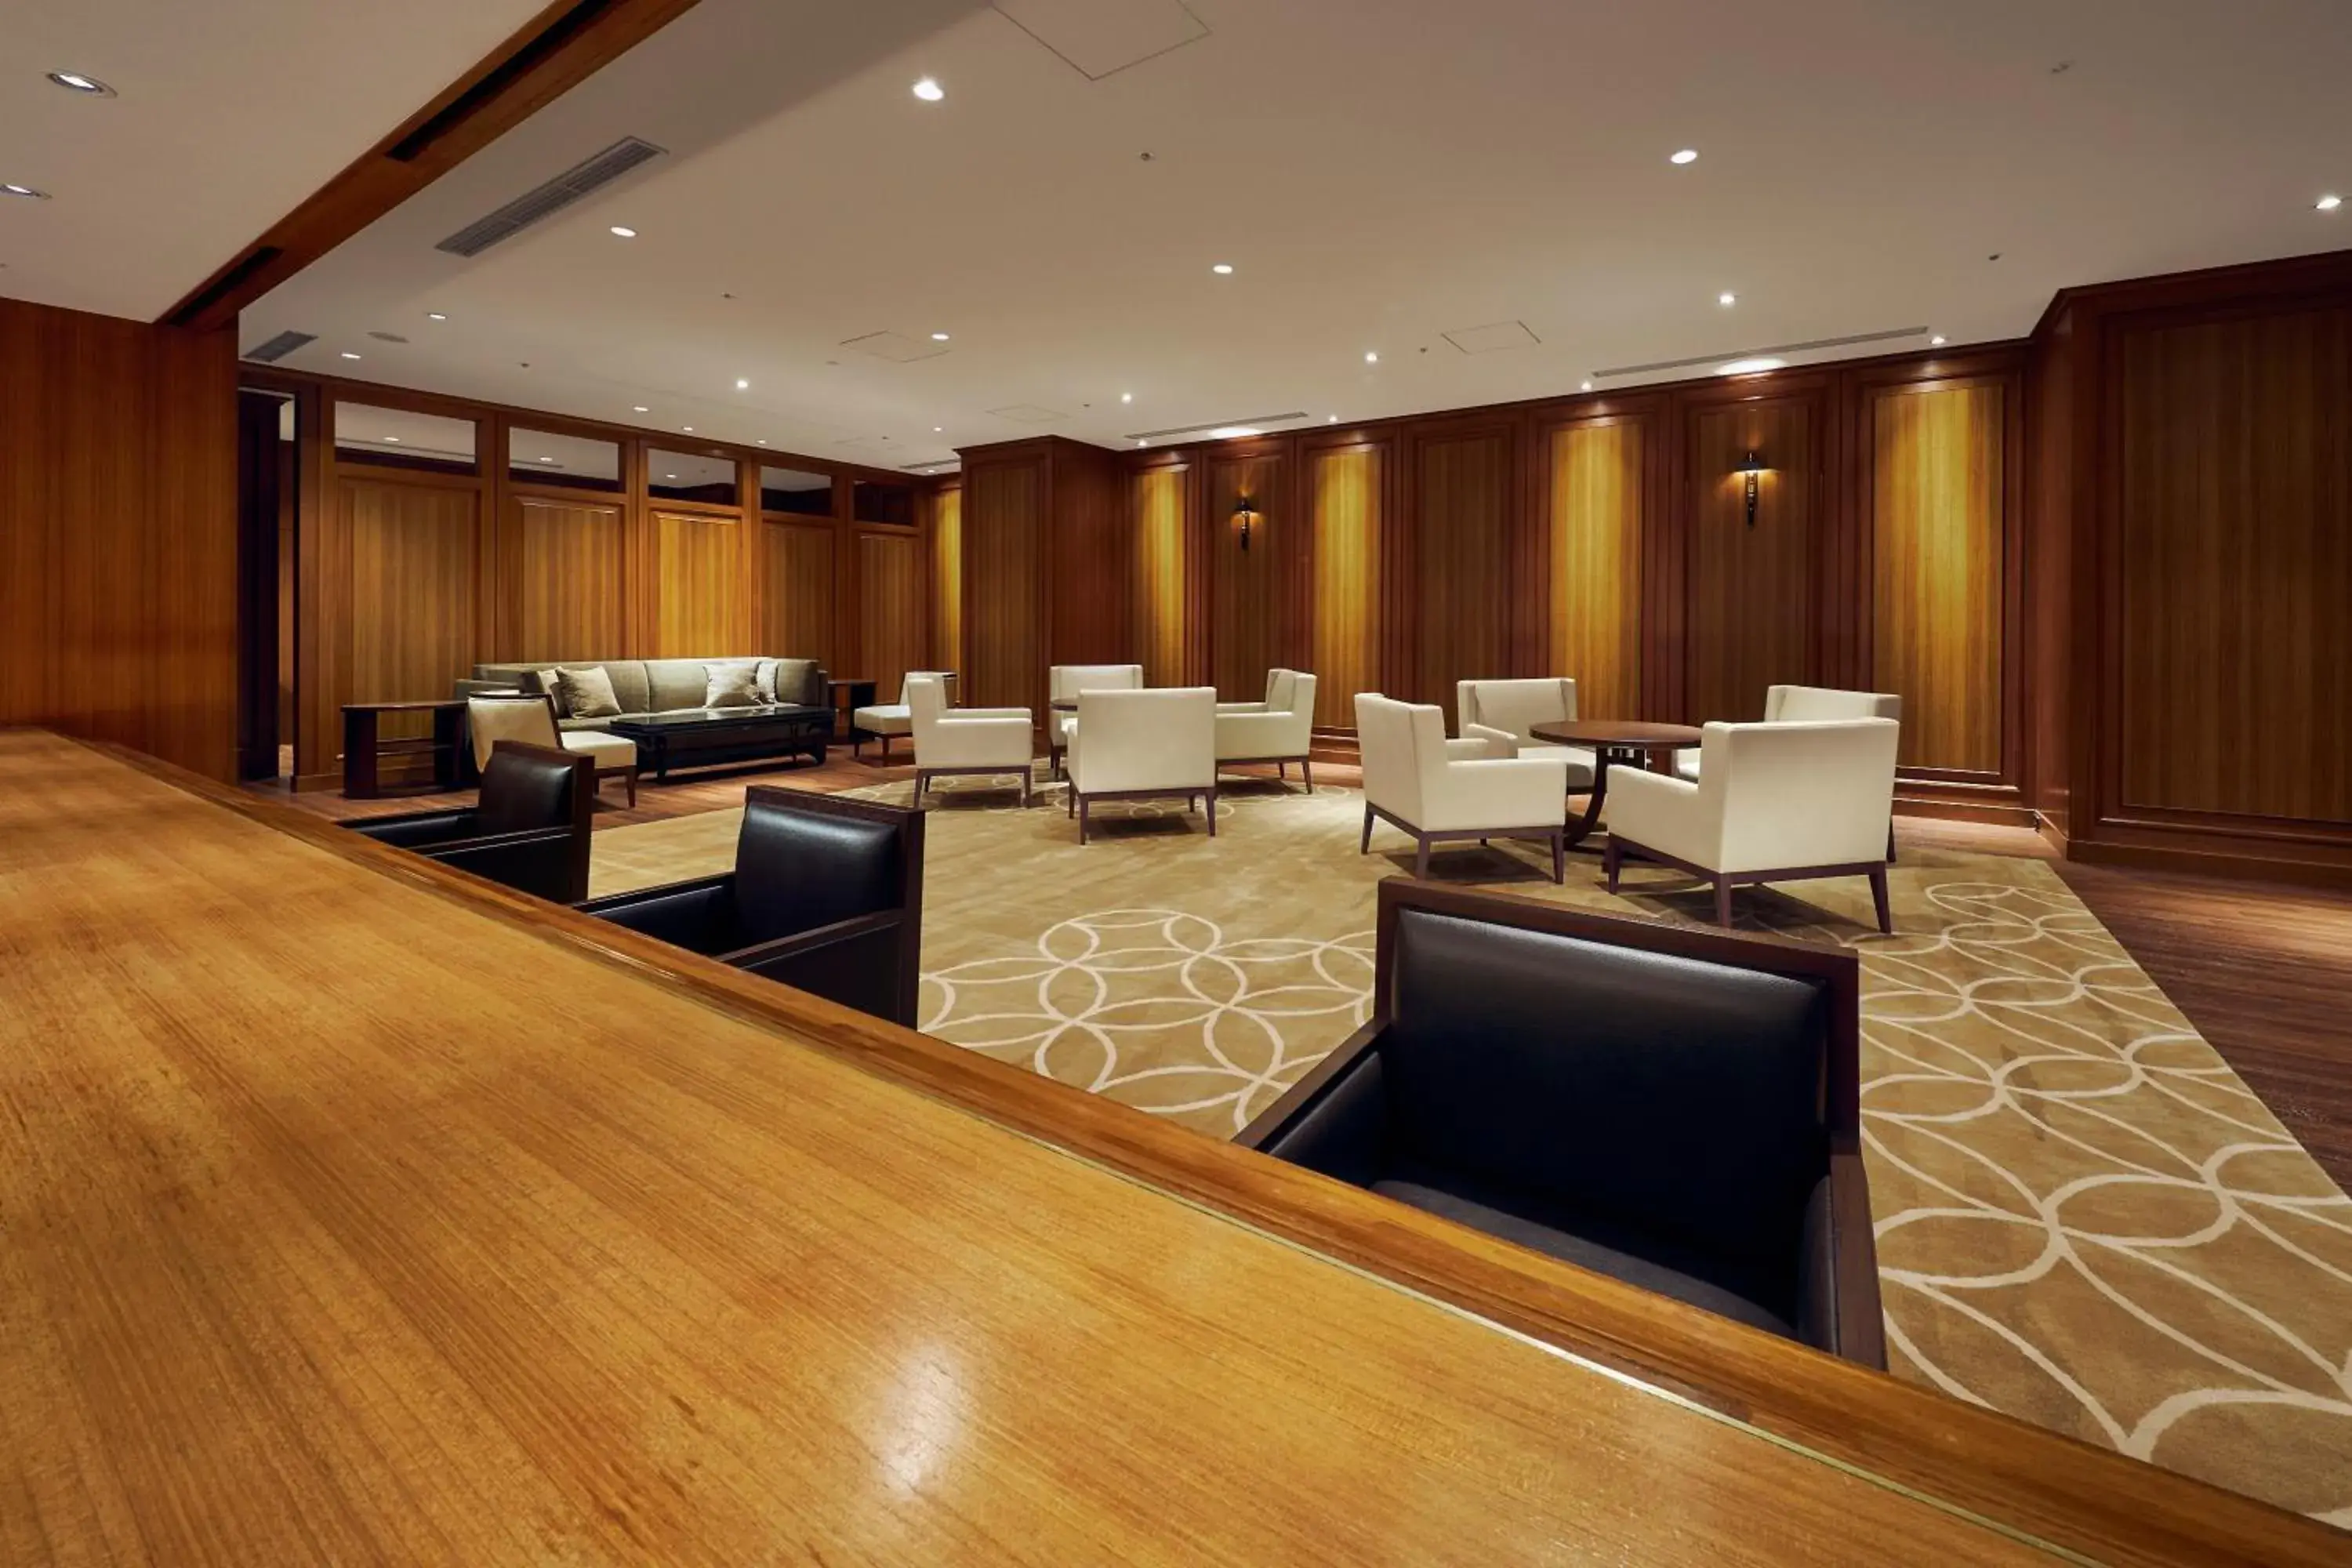 Lobby or reception in Shiba Park Hotel